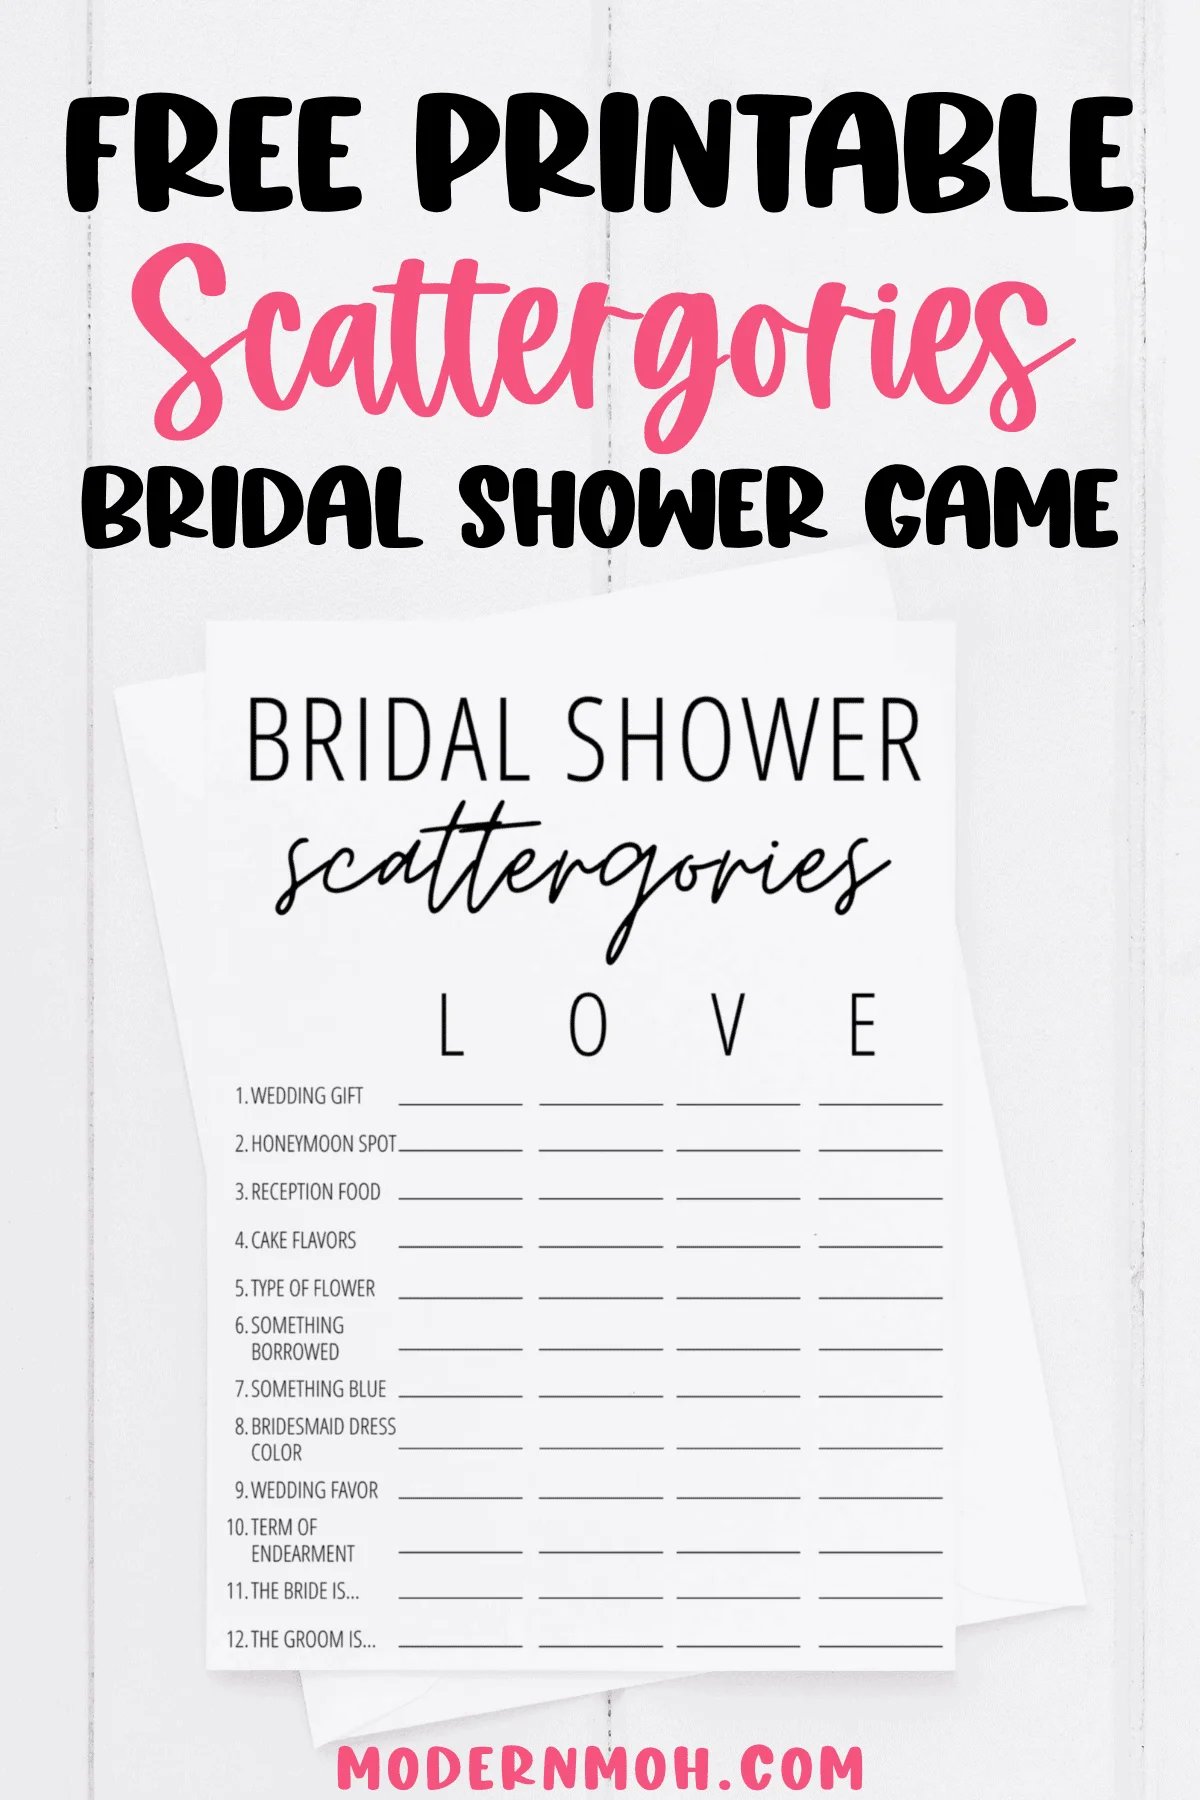 Bridal Shower Scattergories Free Printable | Modern MOH